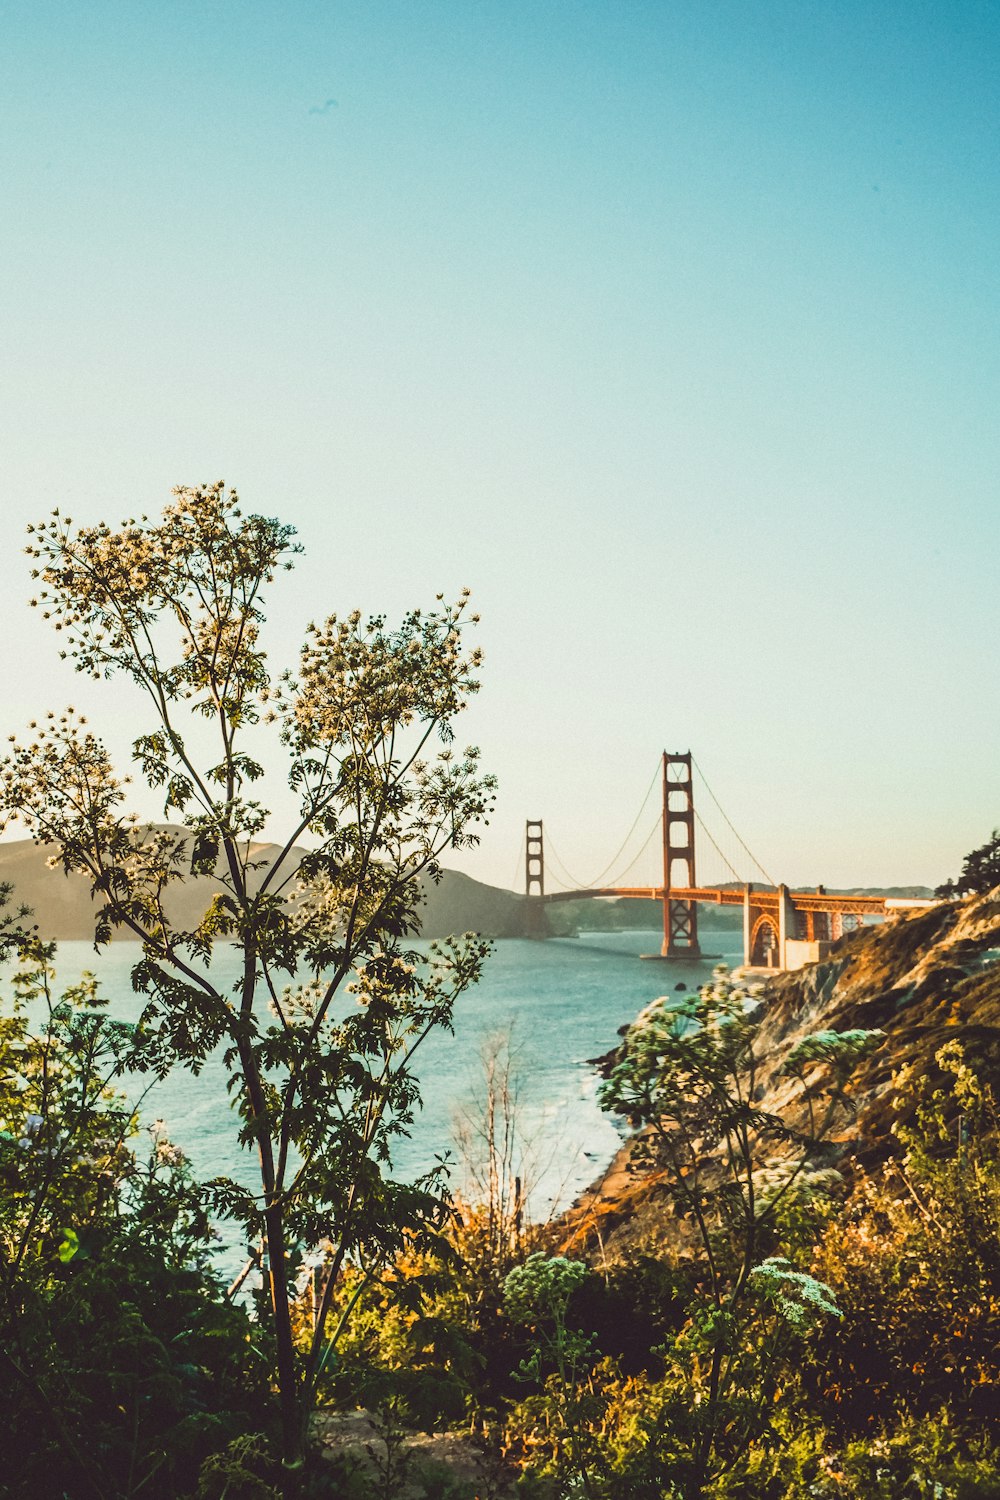 Golden Gate Bridge under blue sky